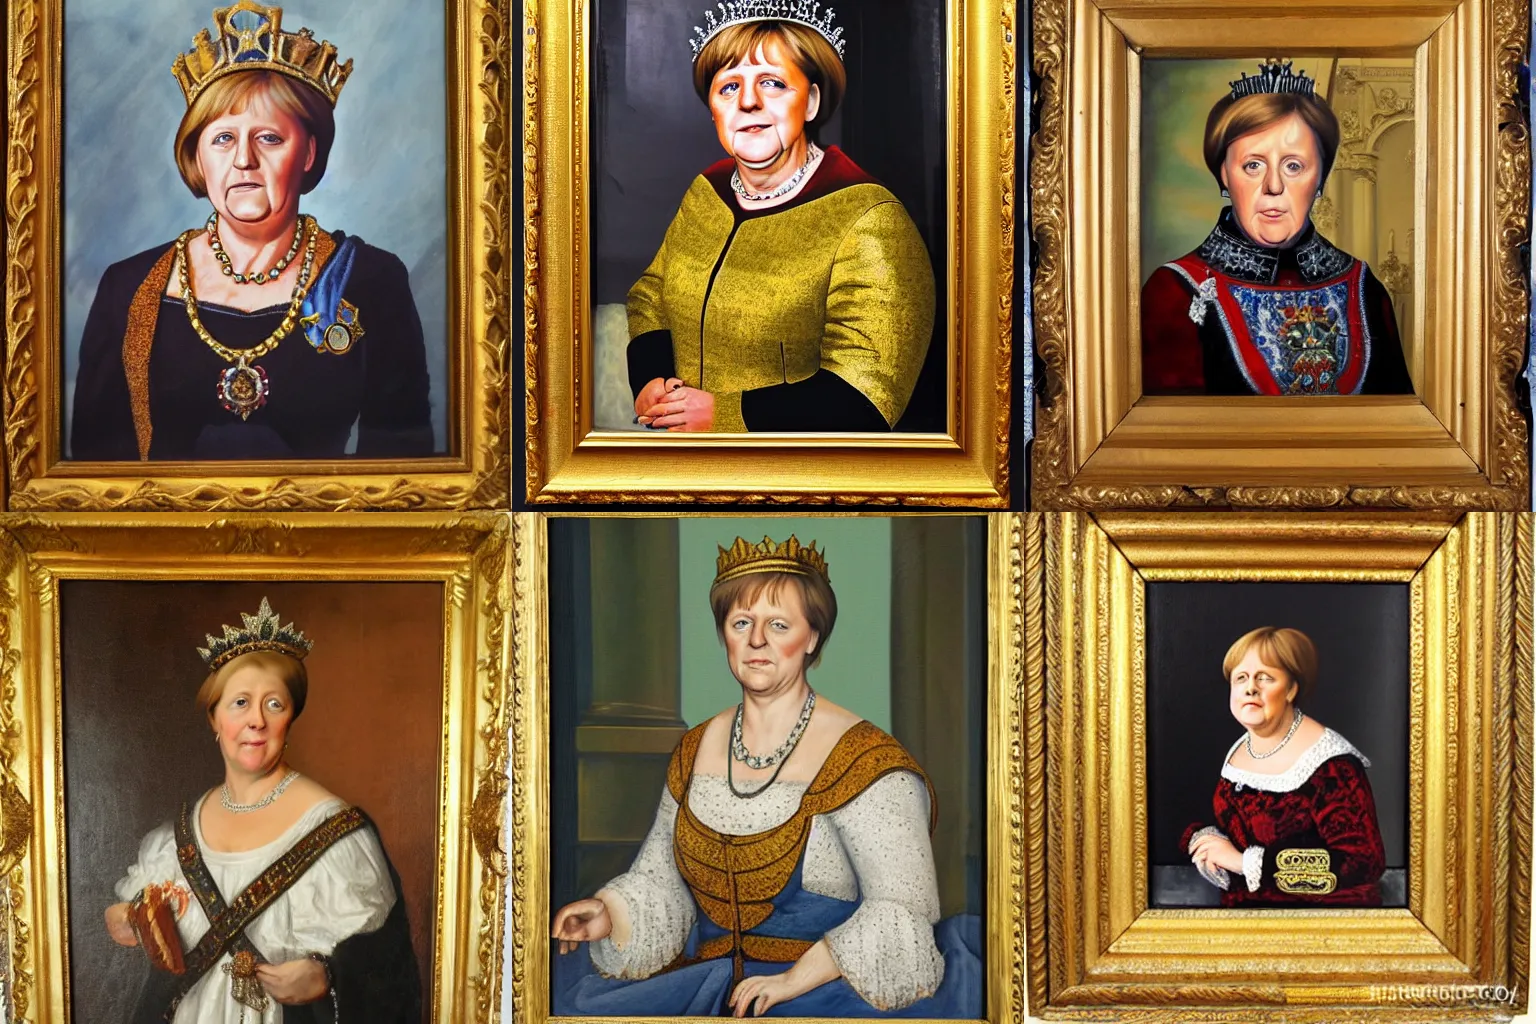 Prompt: Portrait of Merkel as king, antique painting, oil painting, aristocrat, crown